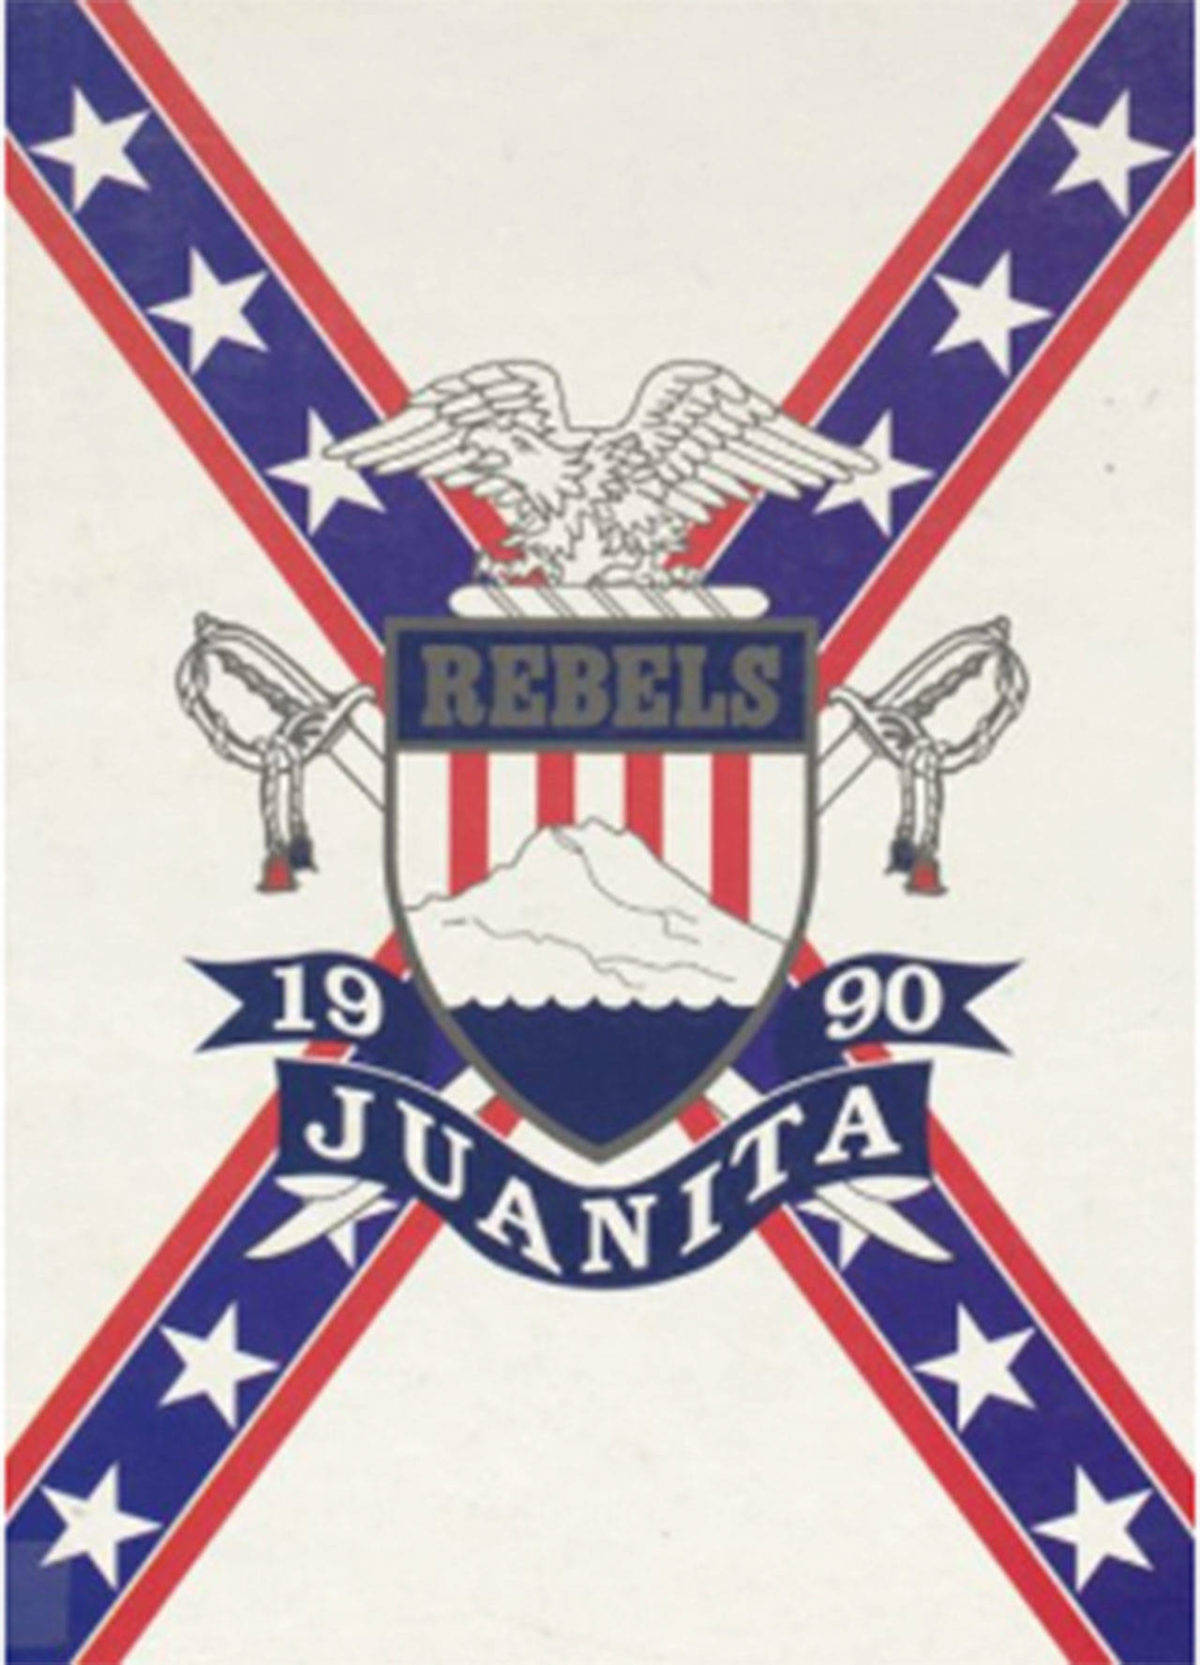 Juanita HS “Rebels” mascot finally defeated